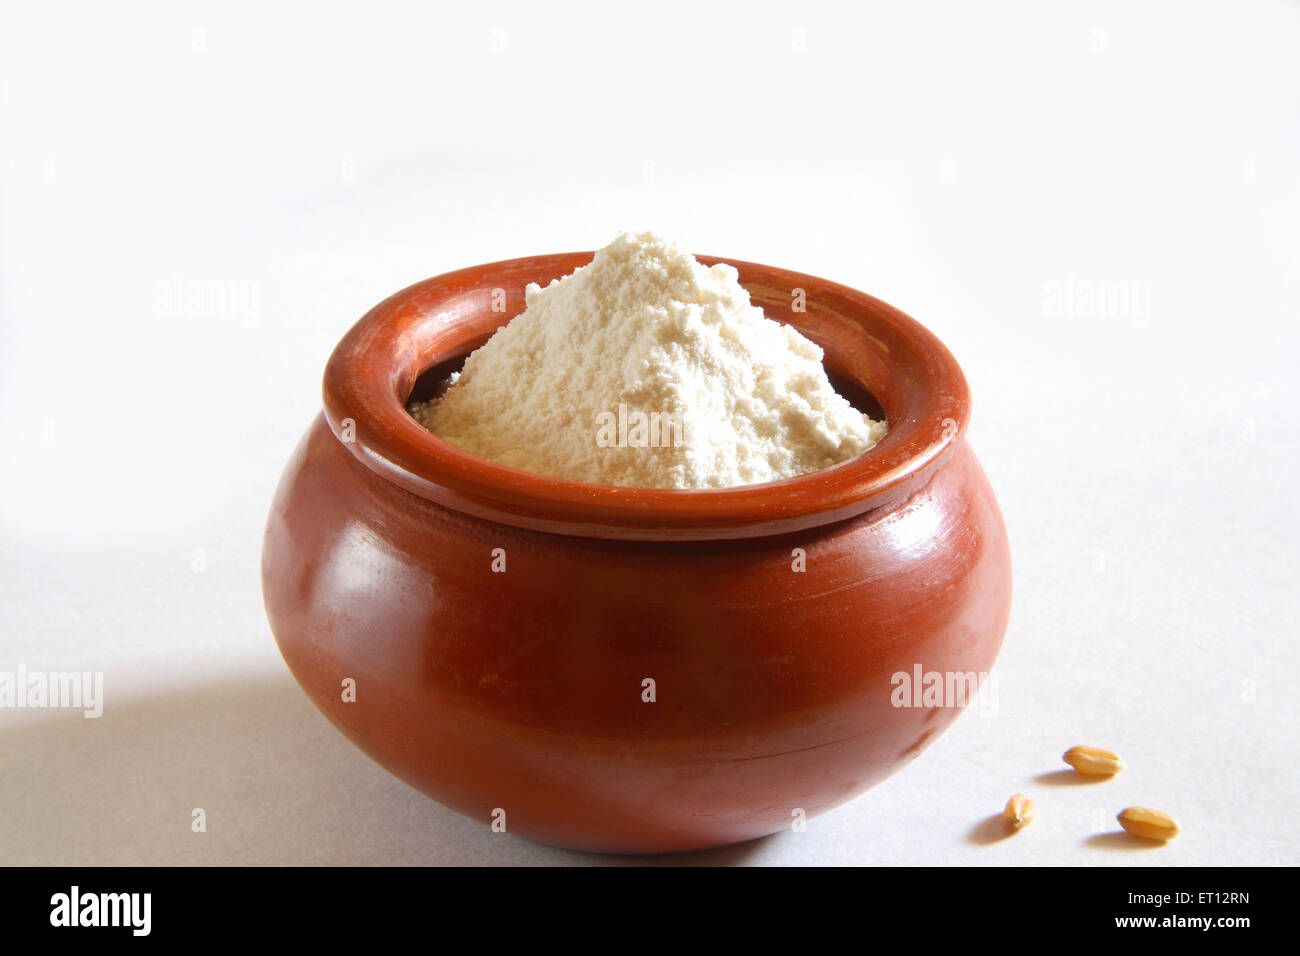 Maida ; la harina de trigo en una vasija de barro ; India Foto de stock